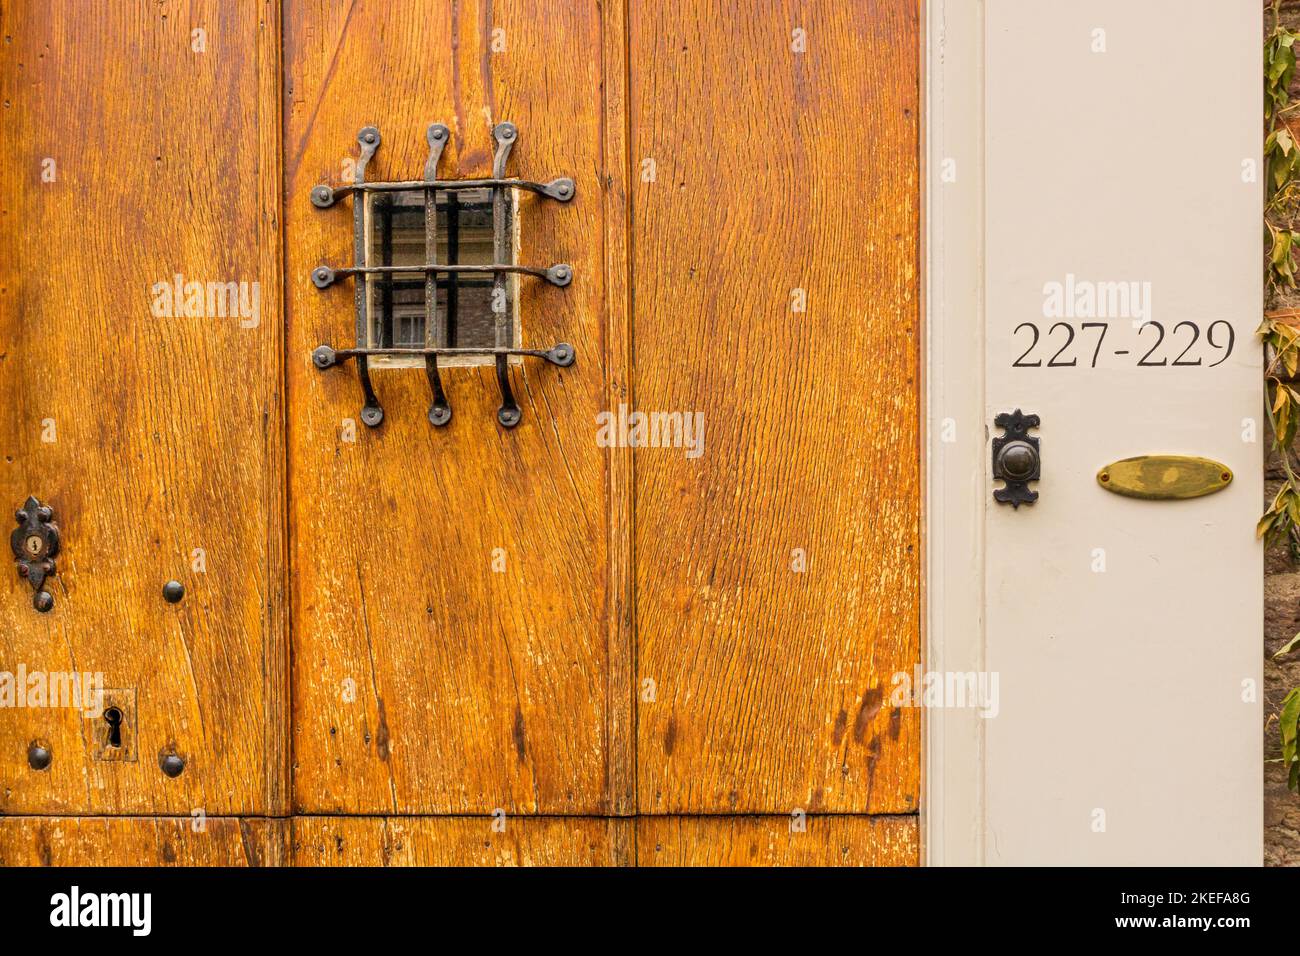 Peephole, doorbell and house numbers at old wooden front door, Utrecht, the Netherlands Stock Photo